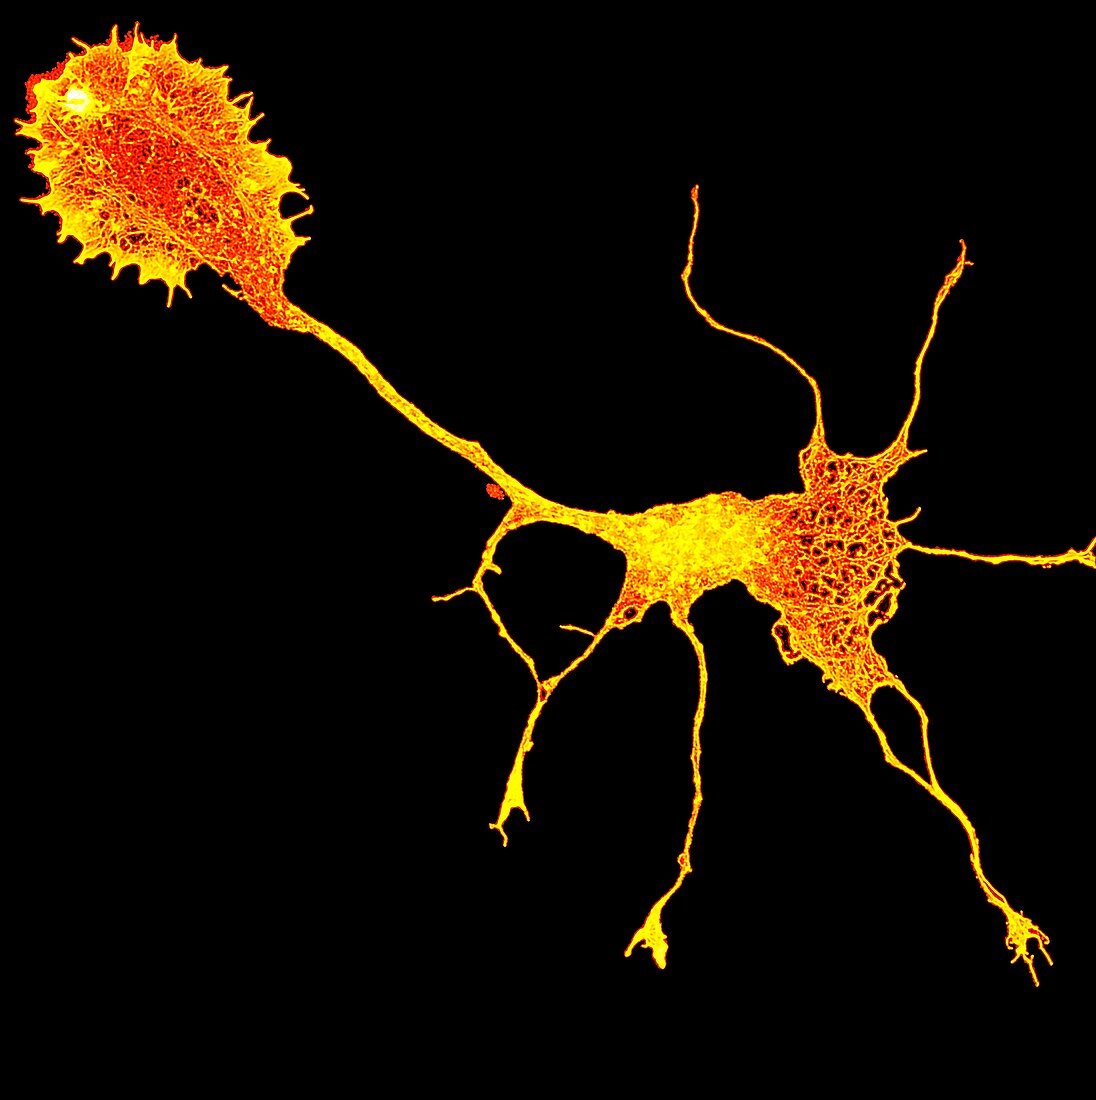 Single cortical neuron, light micrograph